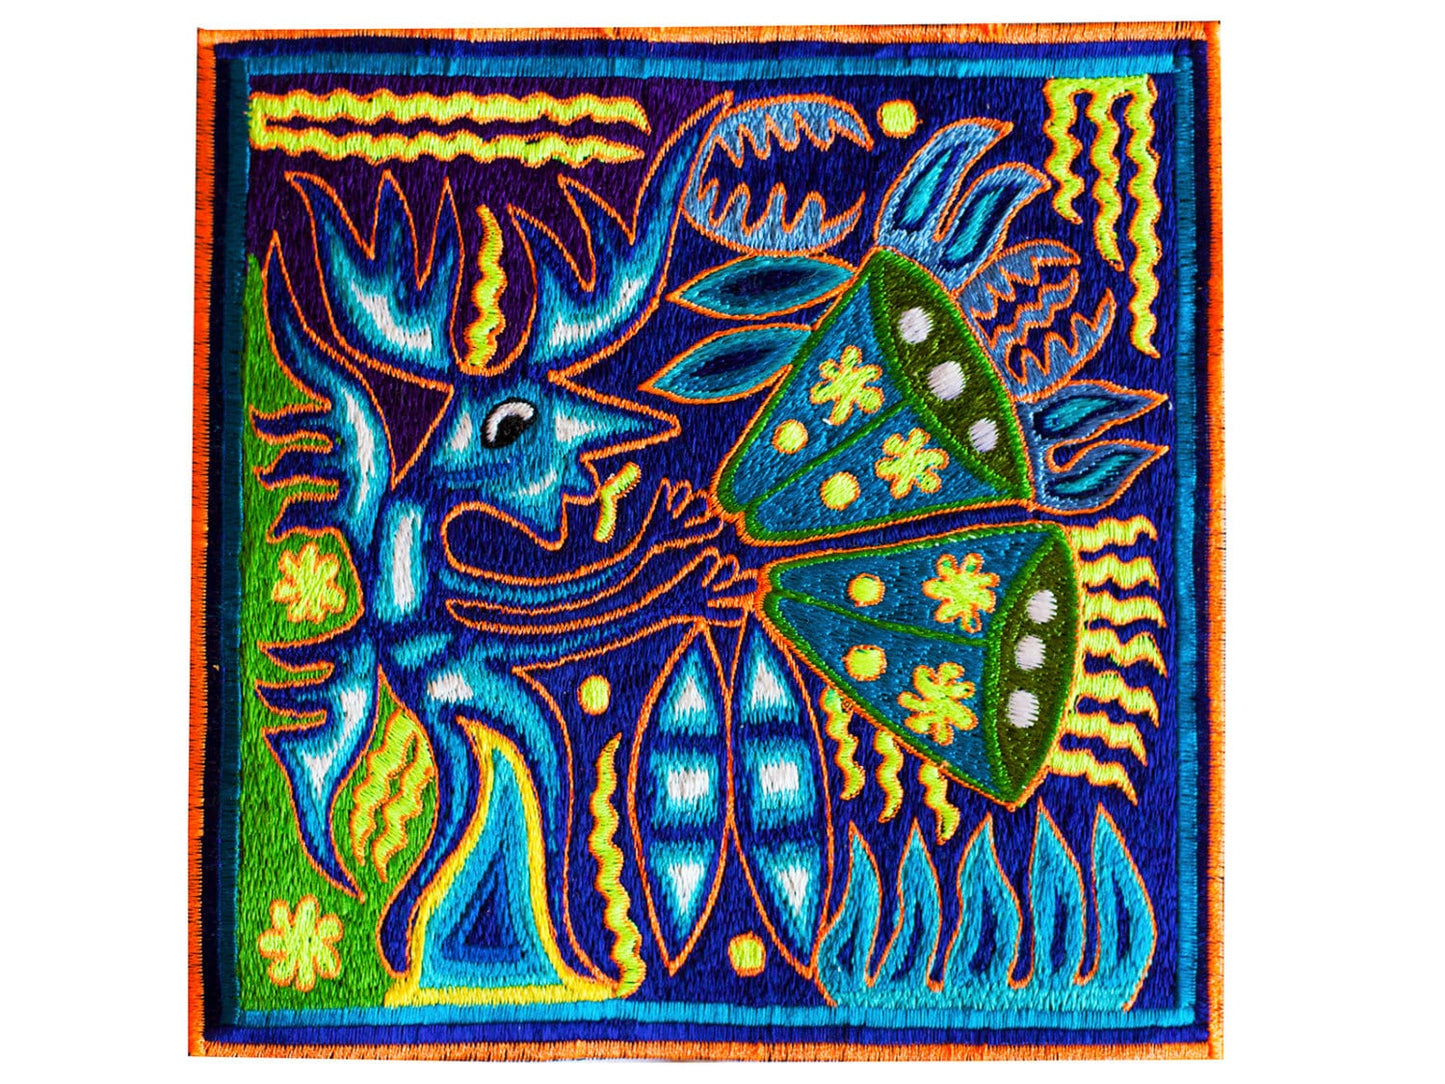 Peyote Spirit Shaman - original indigene mexican Huichol artwork